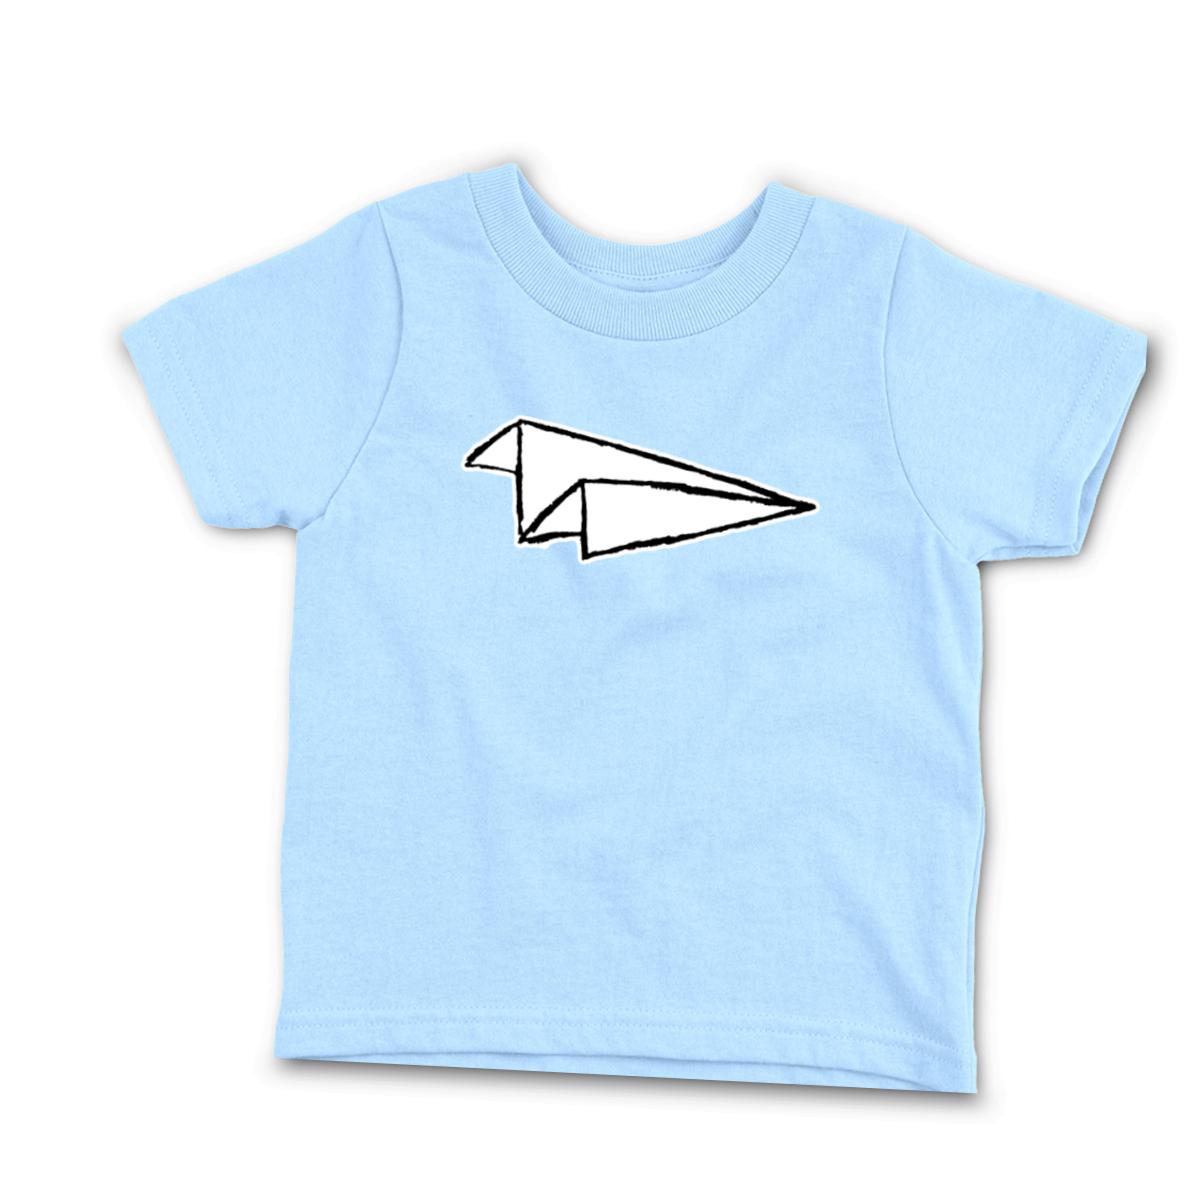 Airplane Sketch Infant Tee 24M light-blue